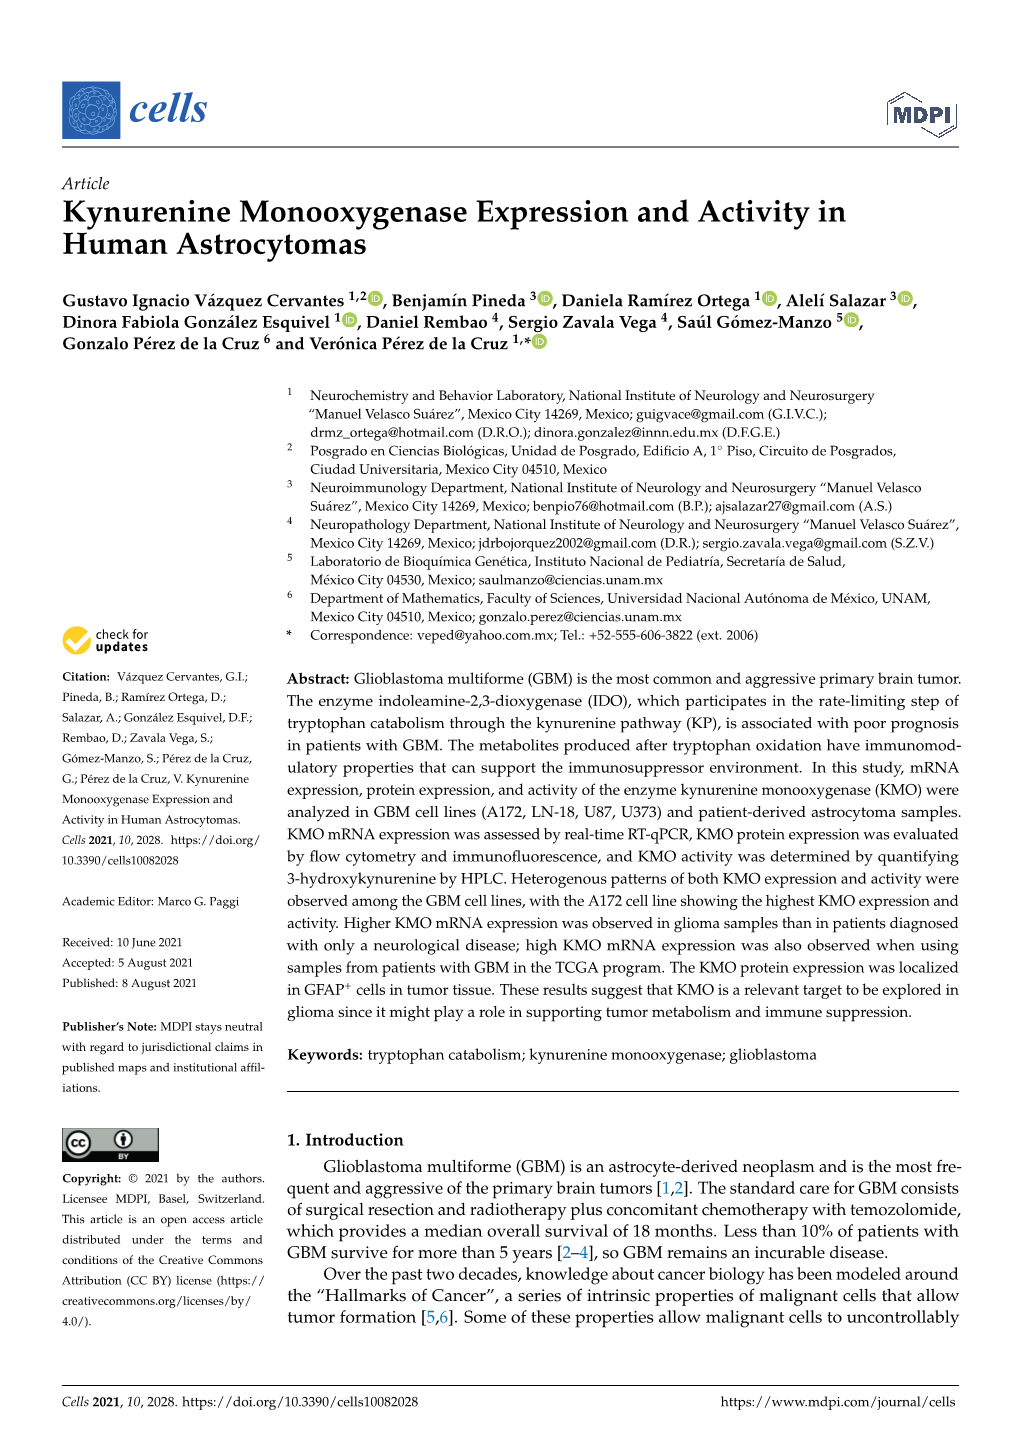 Kynurenine Monooxygenase Expression and Activity in Human Astrocytomas